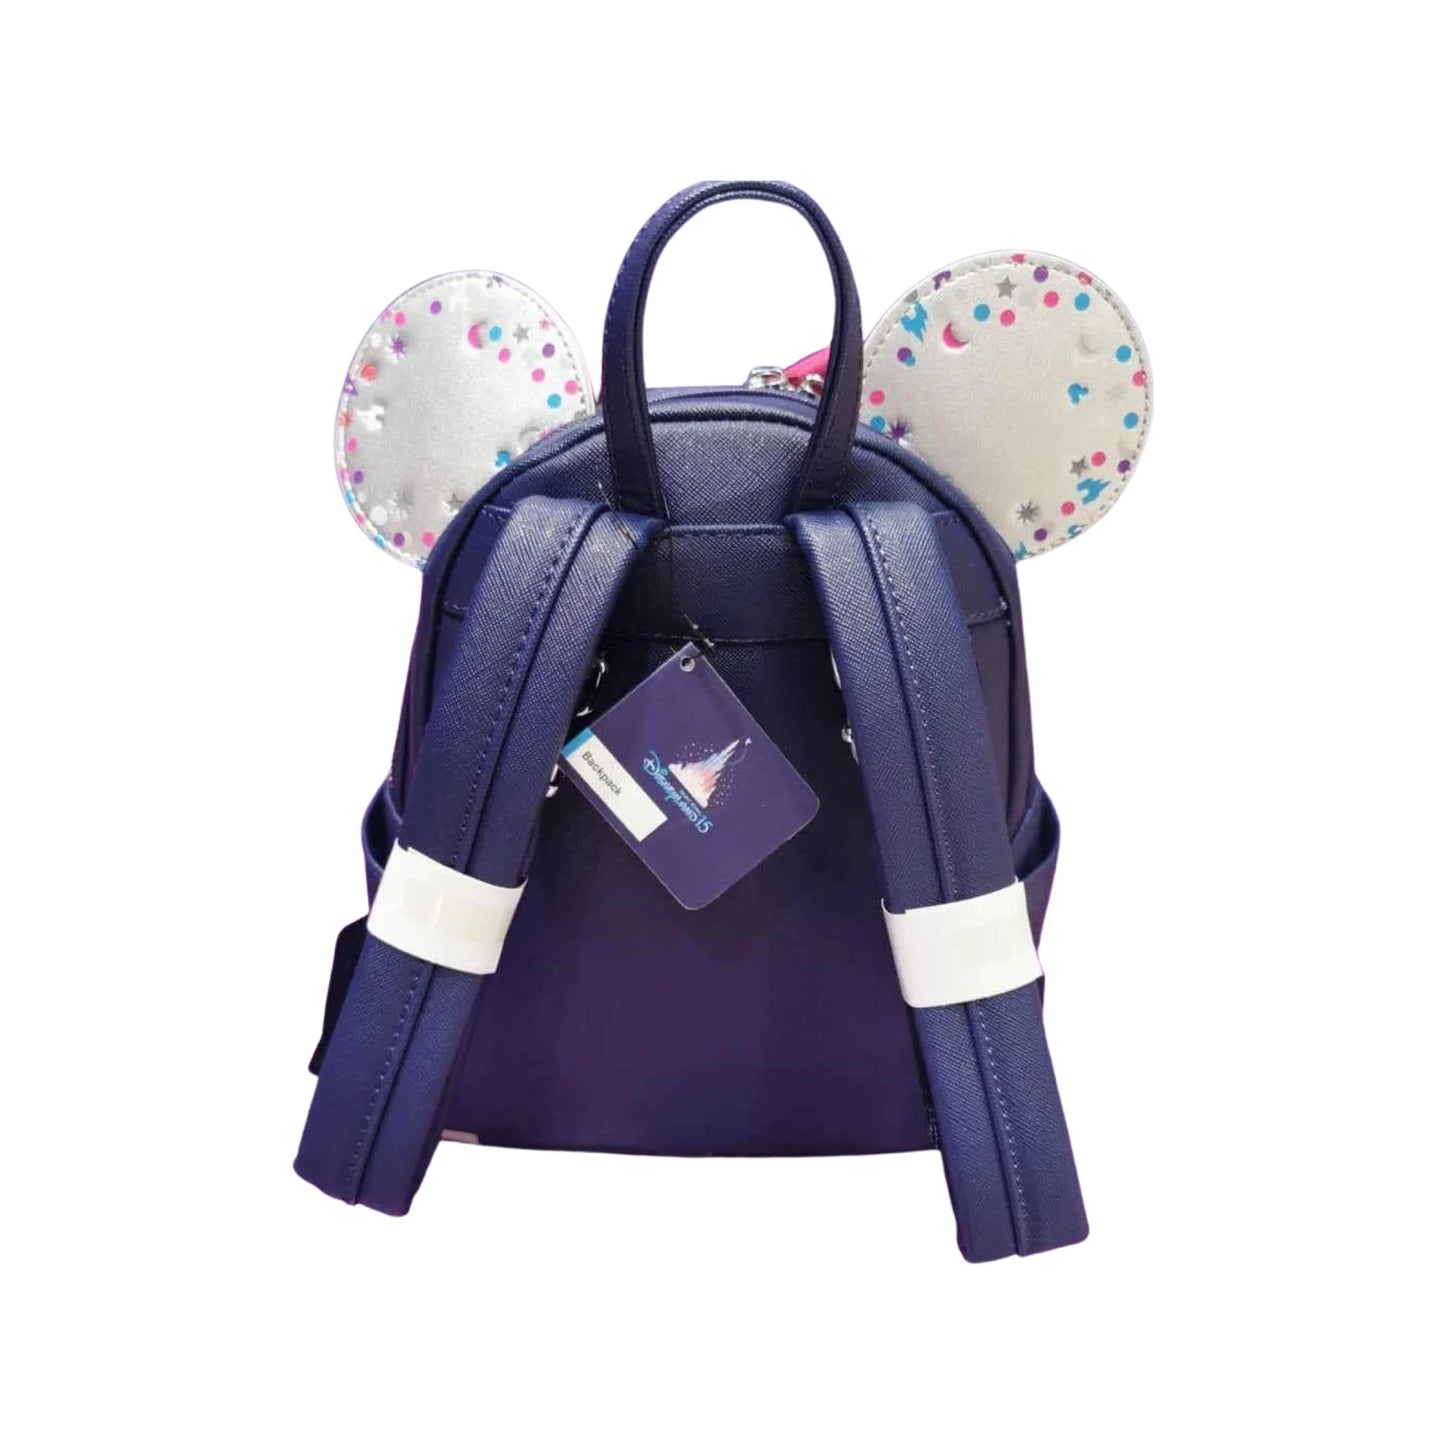 Hong Kong Disneyland 15th Anniversary Mini Backpack